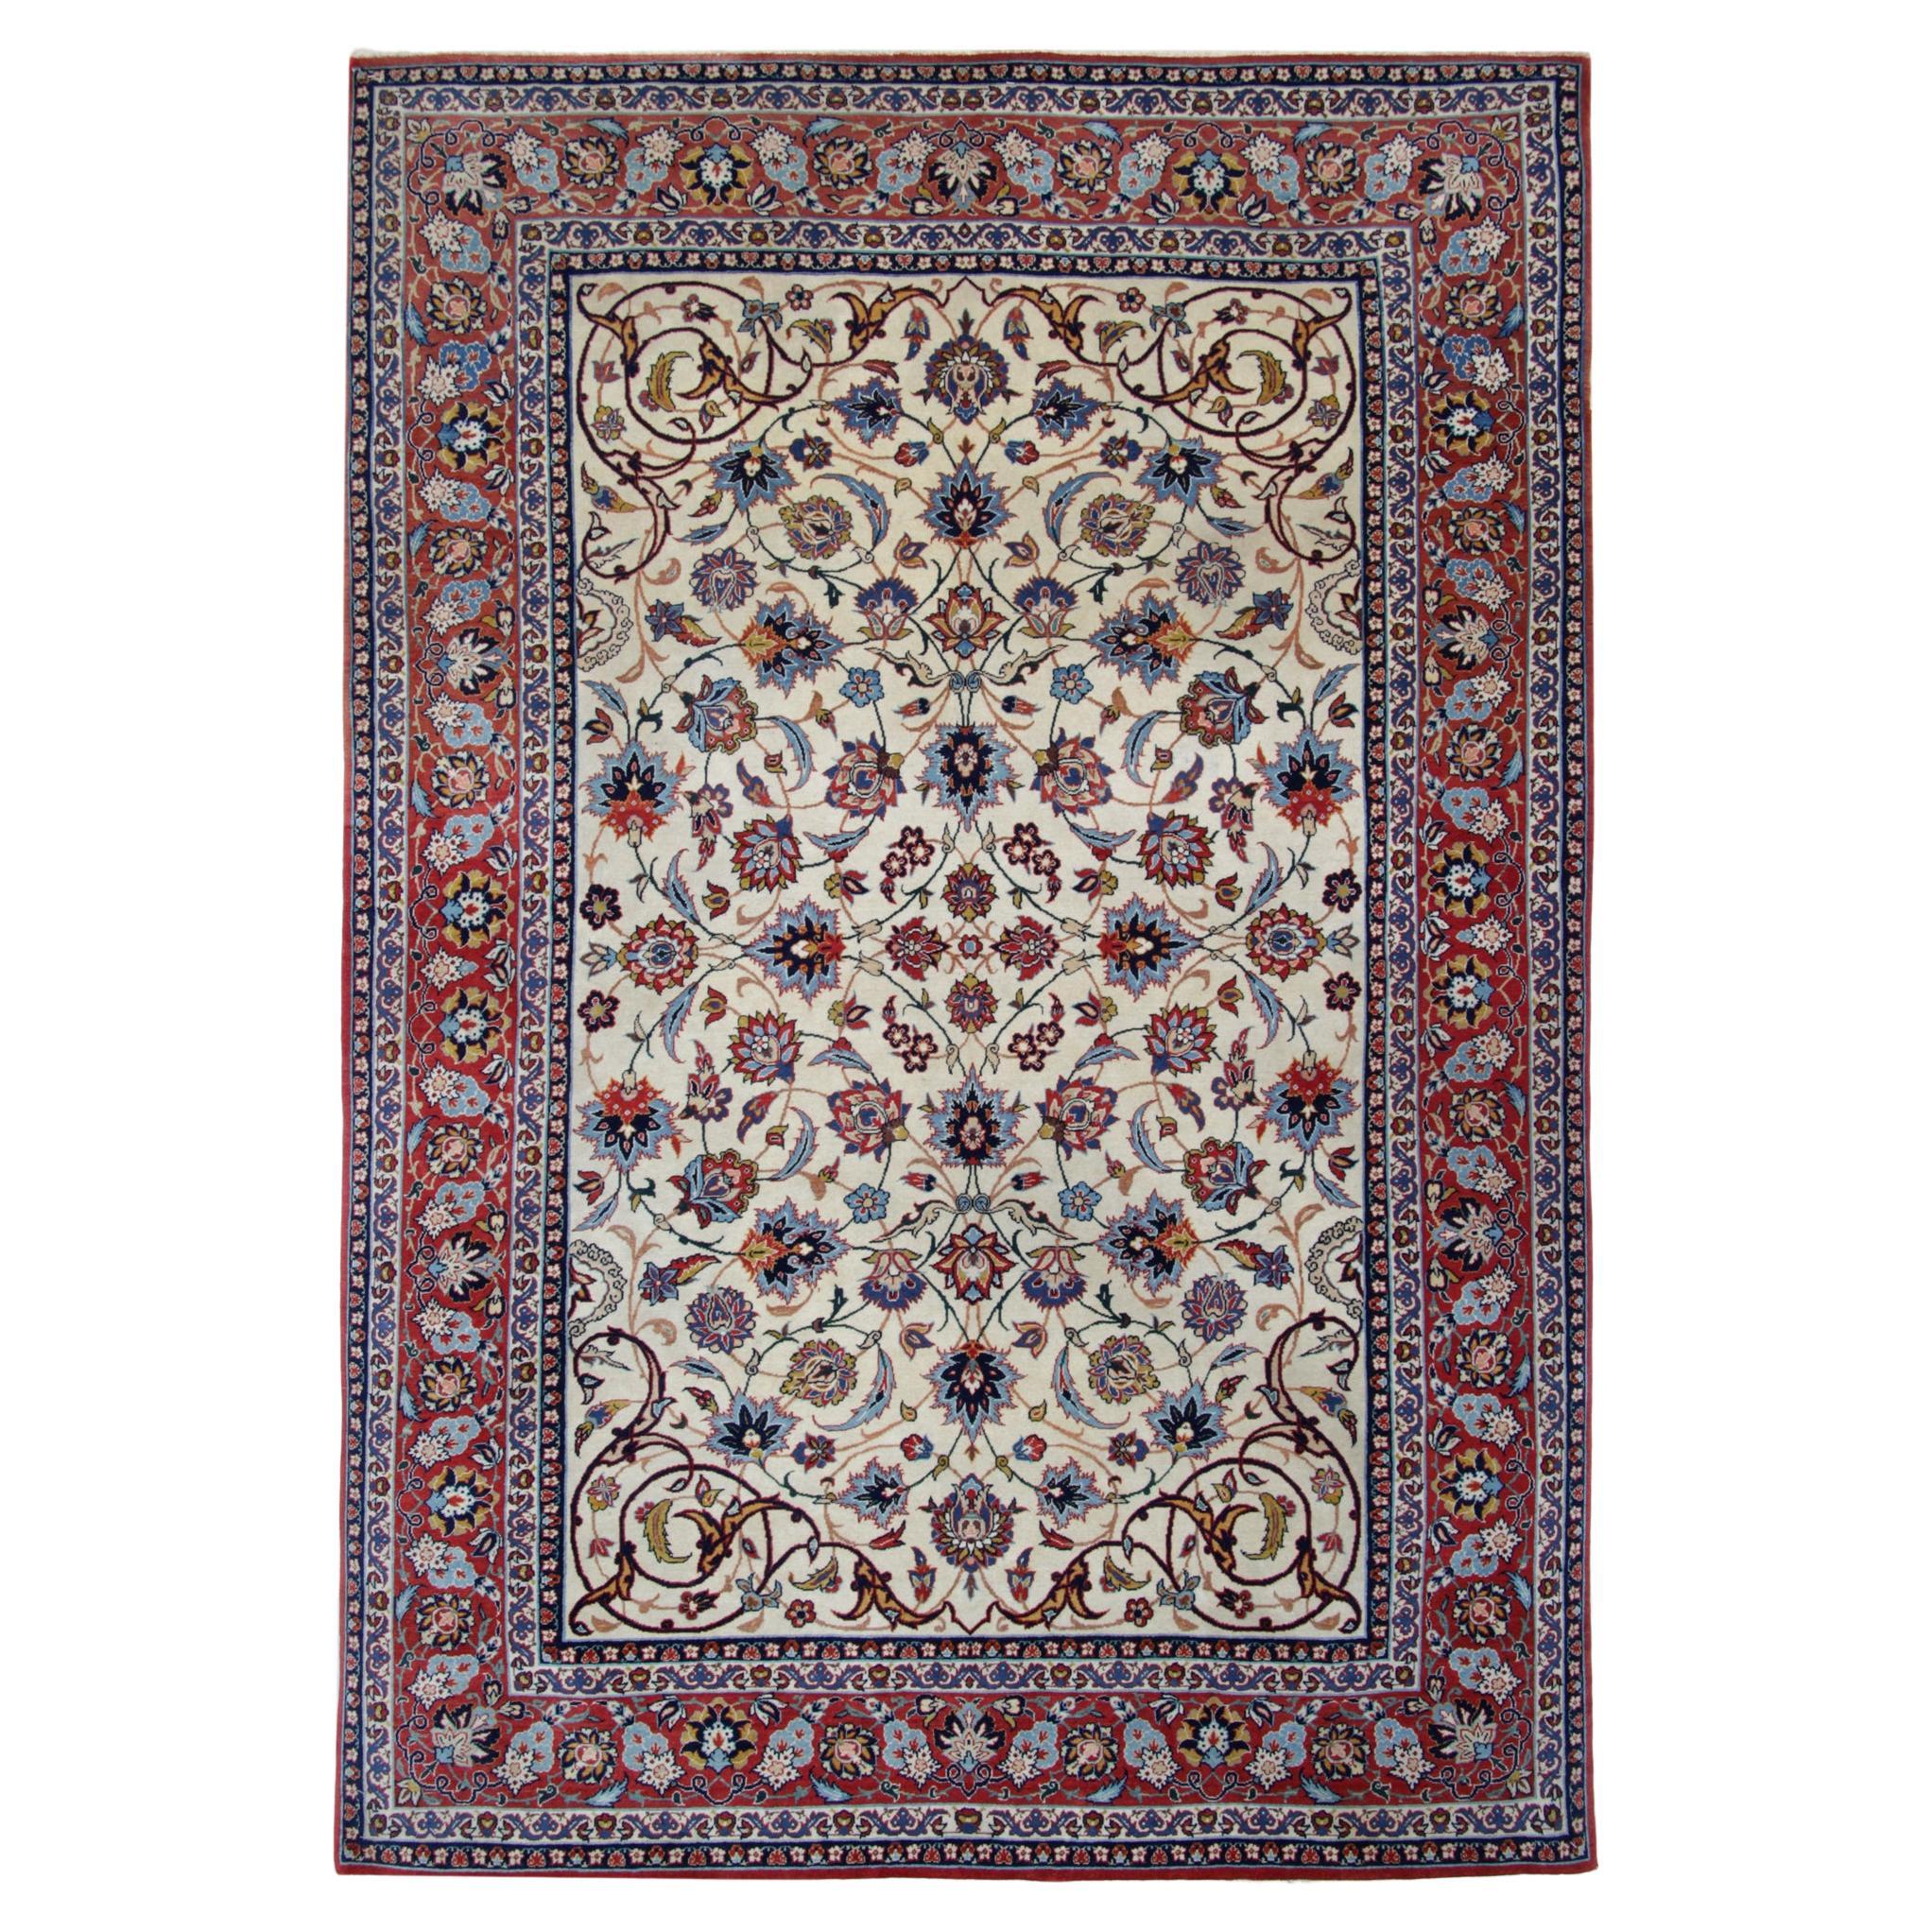 Vintage Rugs Floral Kurk Handwoven Oriental Blue Red Cream Carpet Rug 206x139cm  For Sale